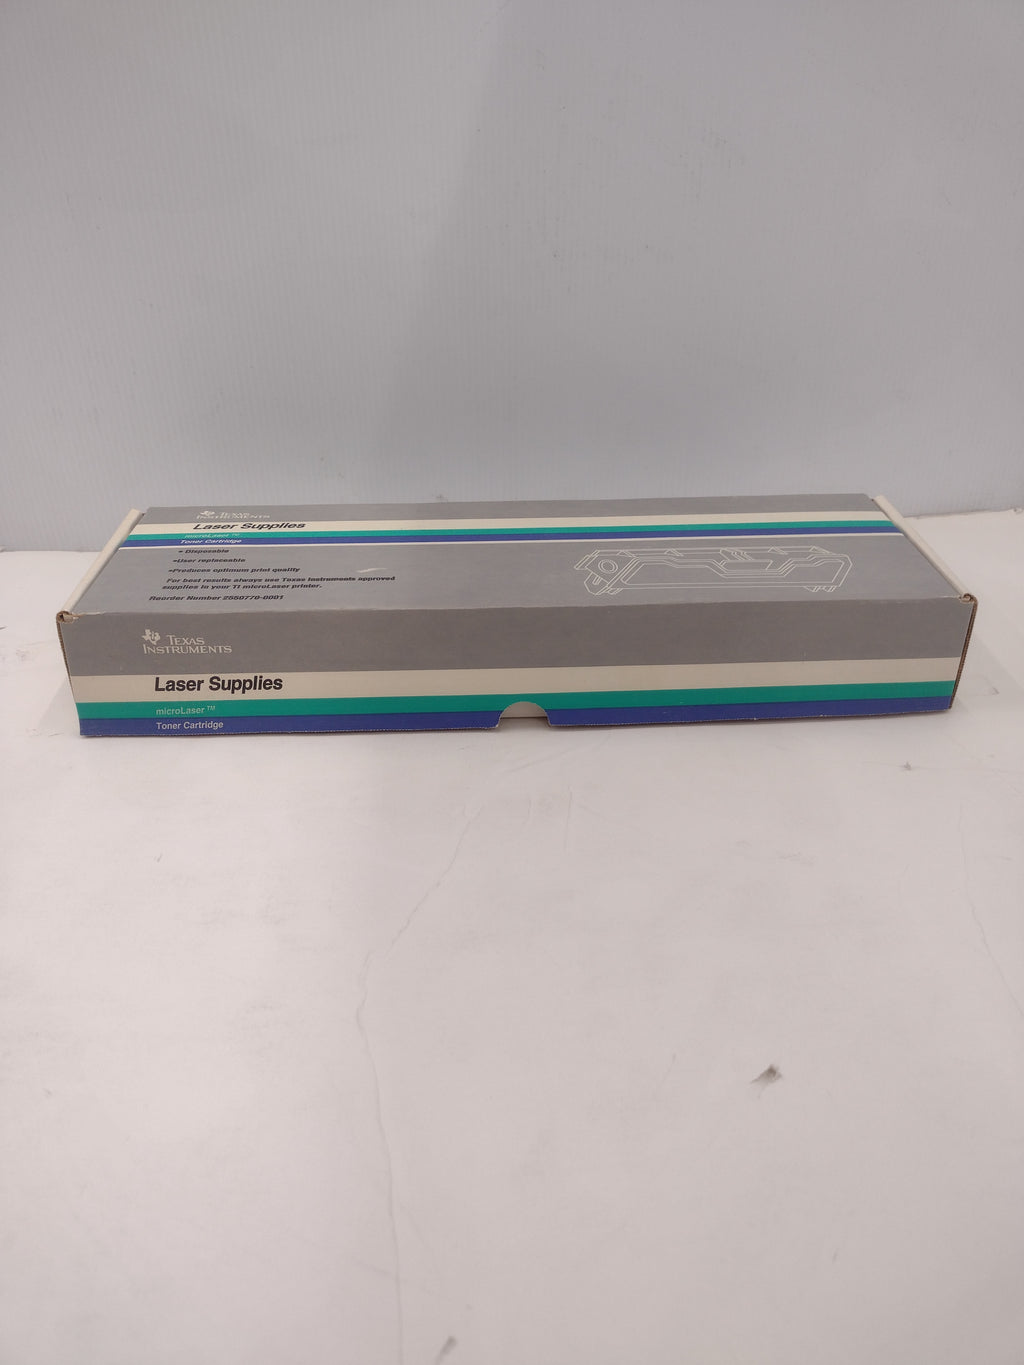 Texas Instruments microLaser Toner Cartridge 2550770-0001